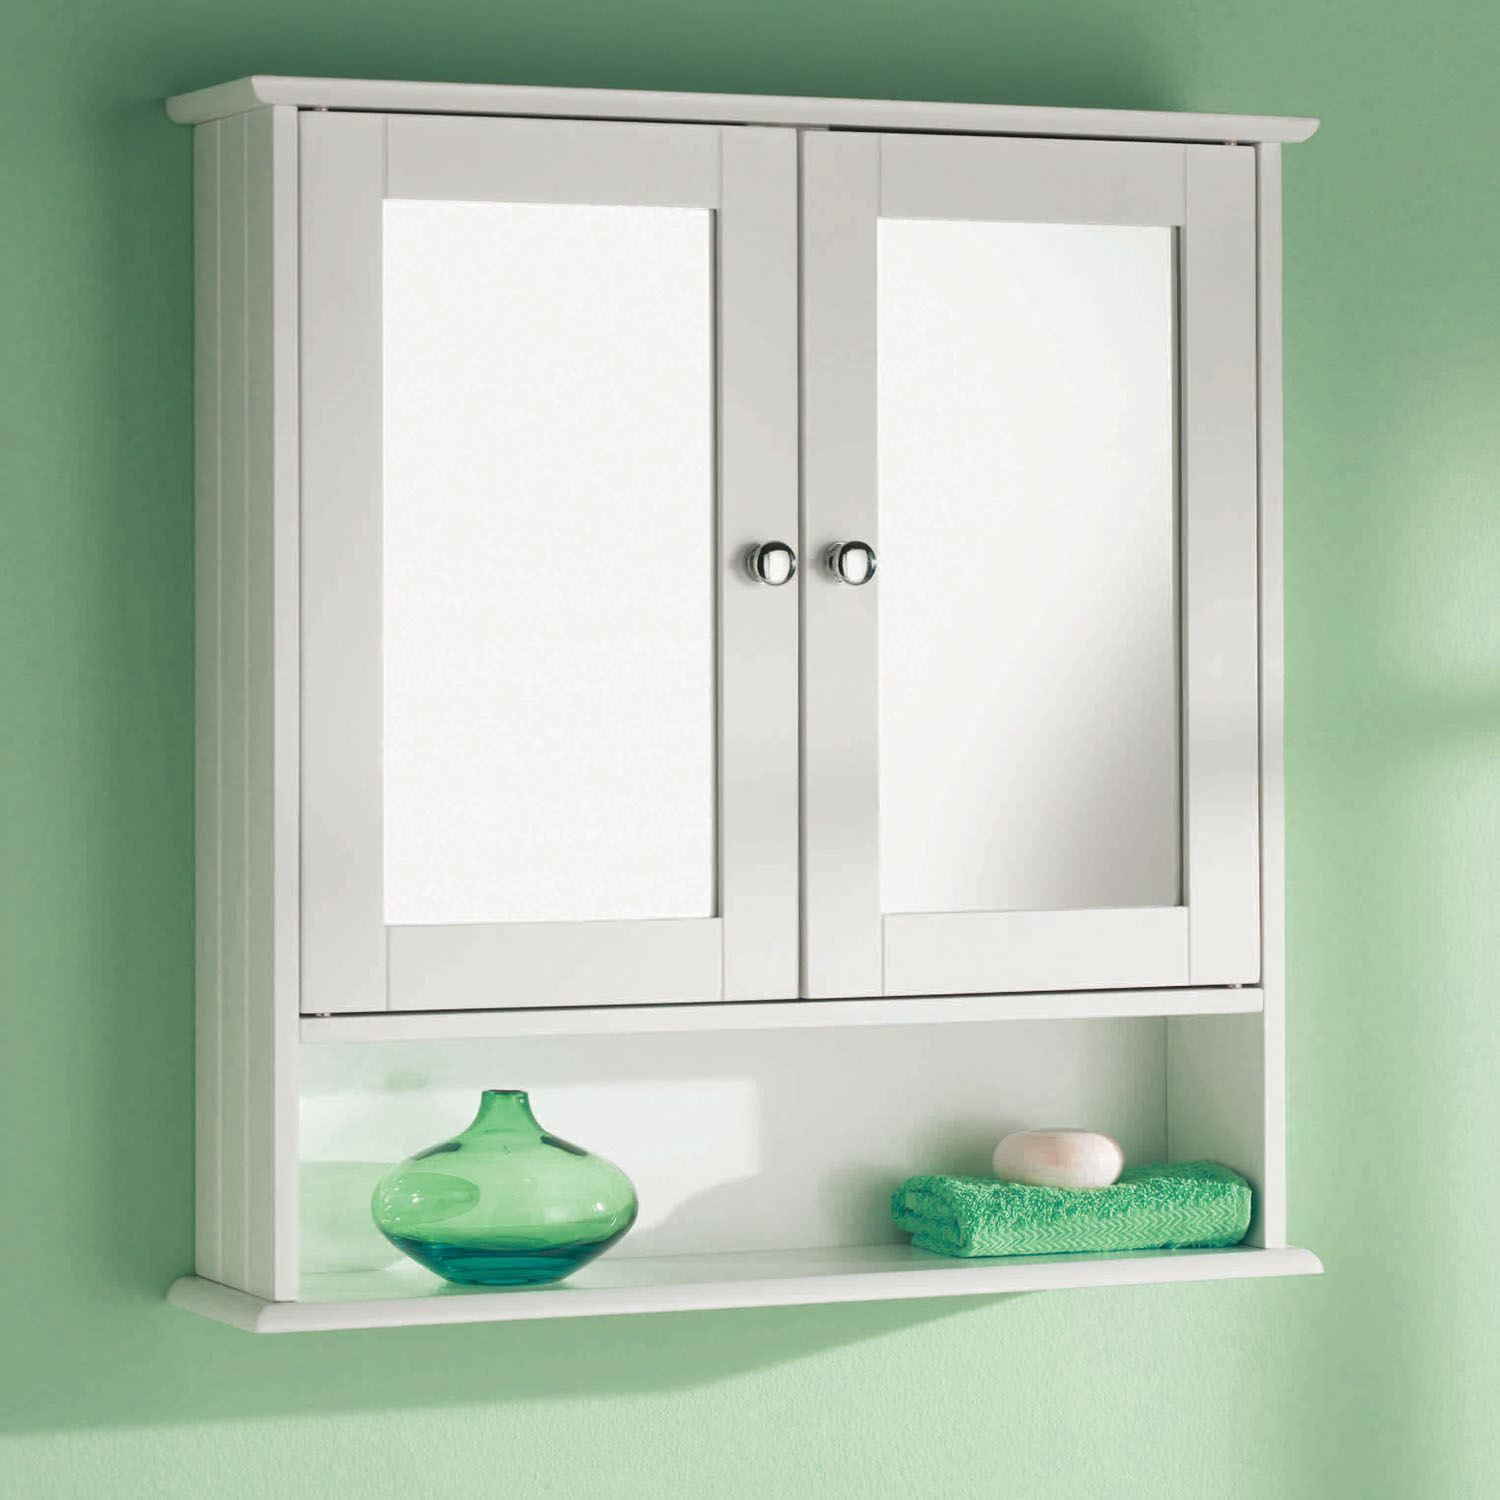 Double Door Mirror Shelf Wall Mounted Wood Storage Bathroom with regard to measurements 1500 X 1500